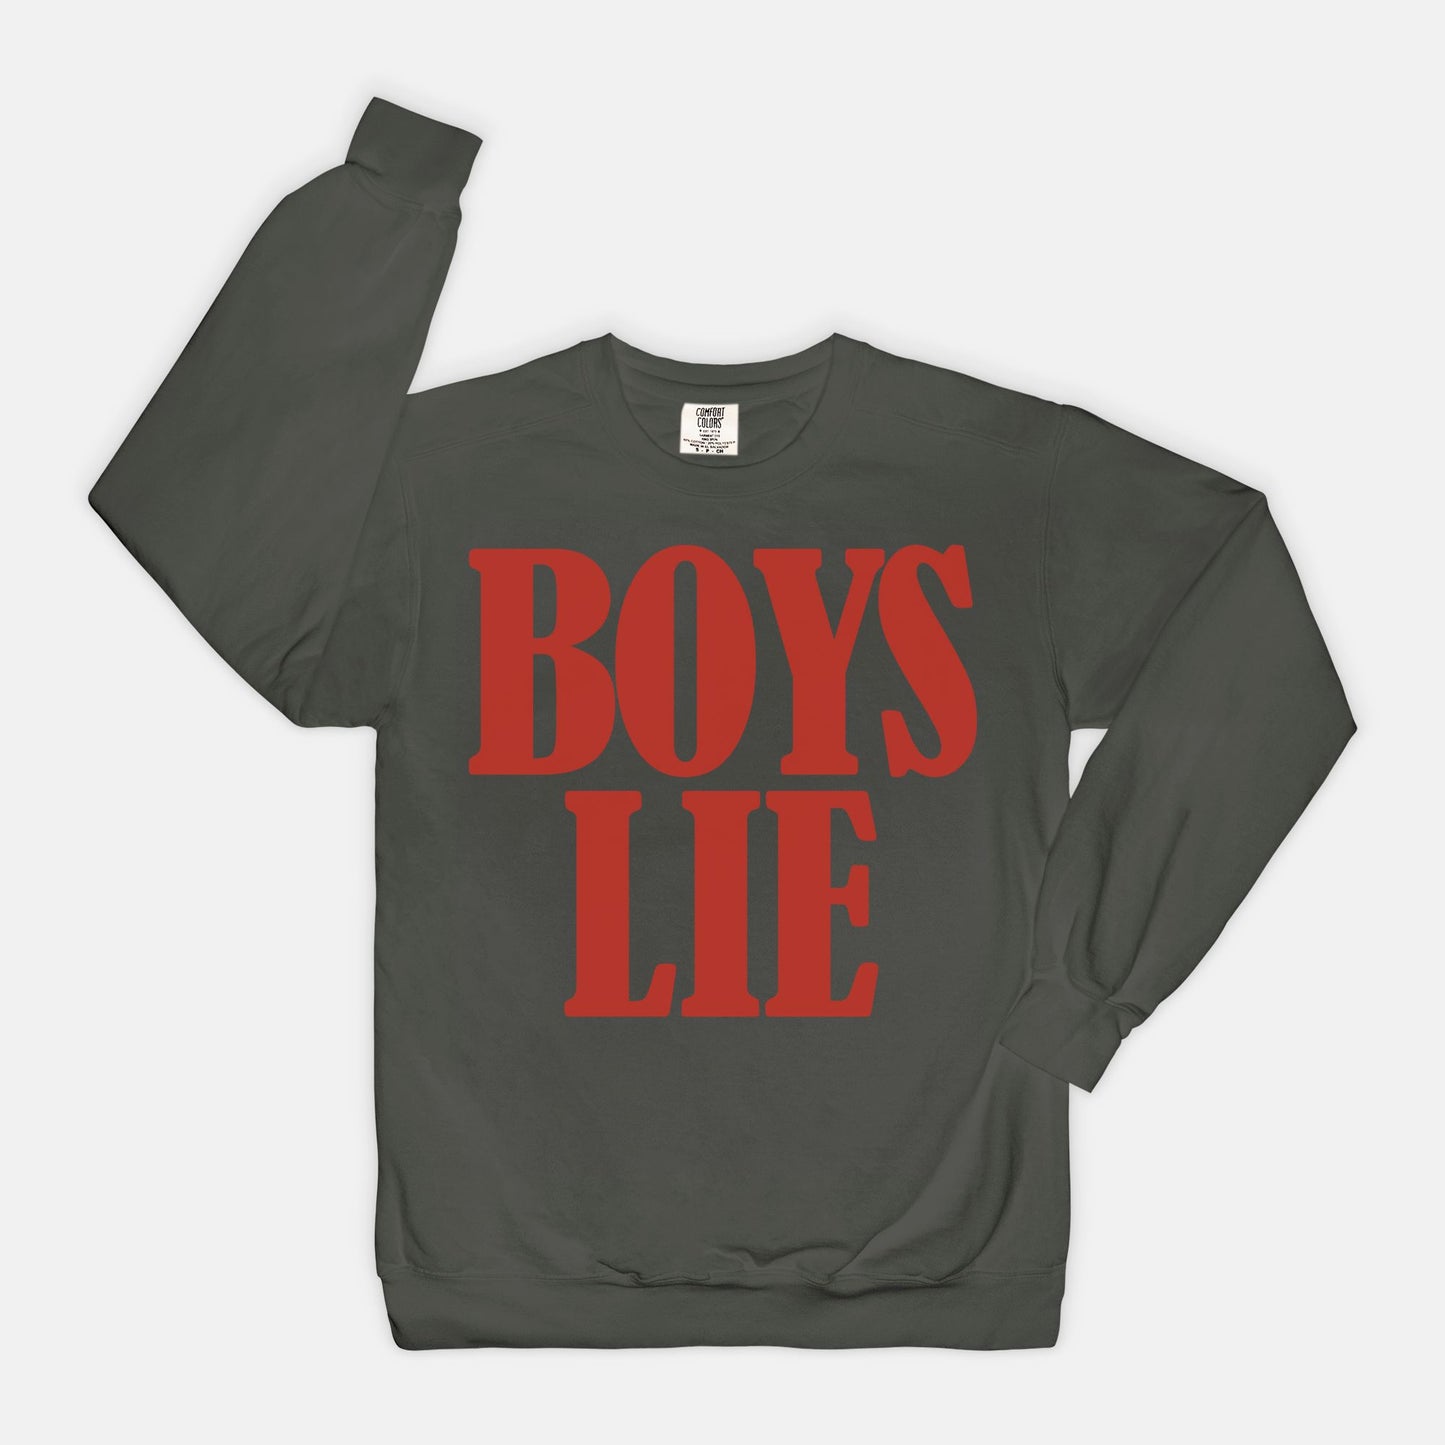 Boys Lie Crewneck